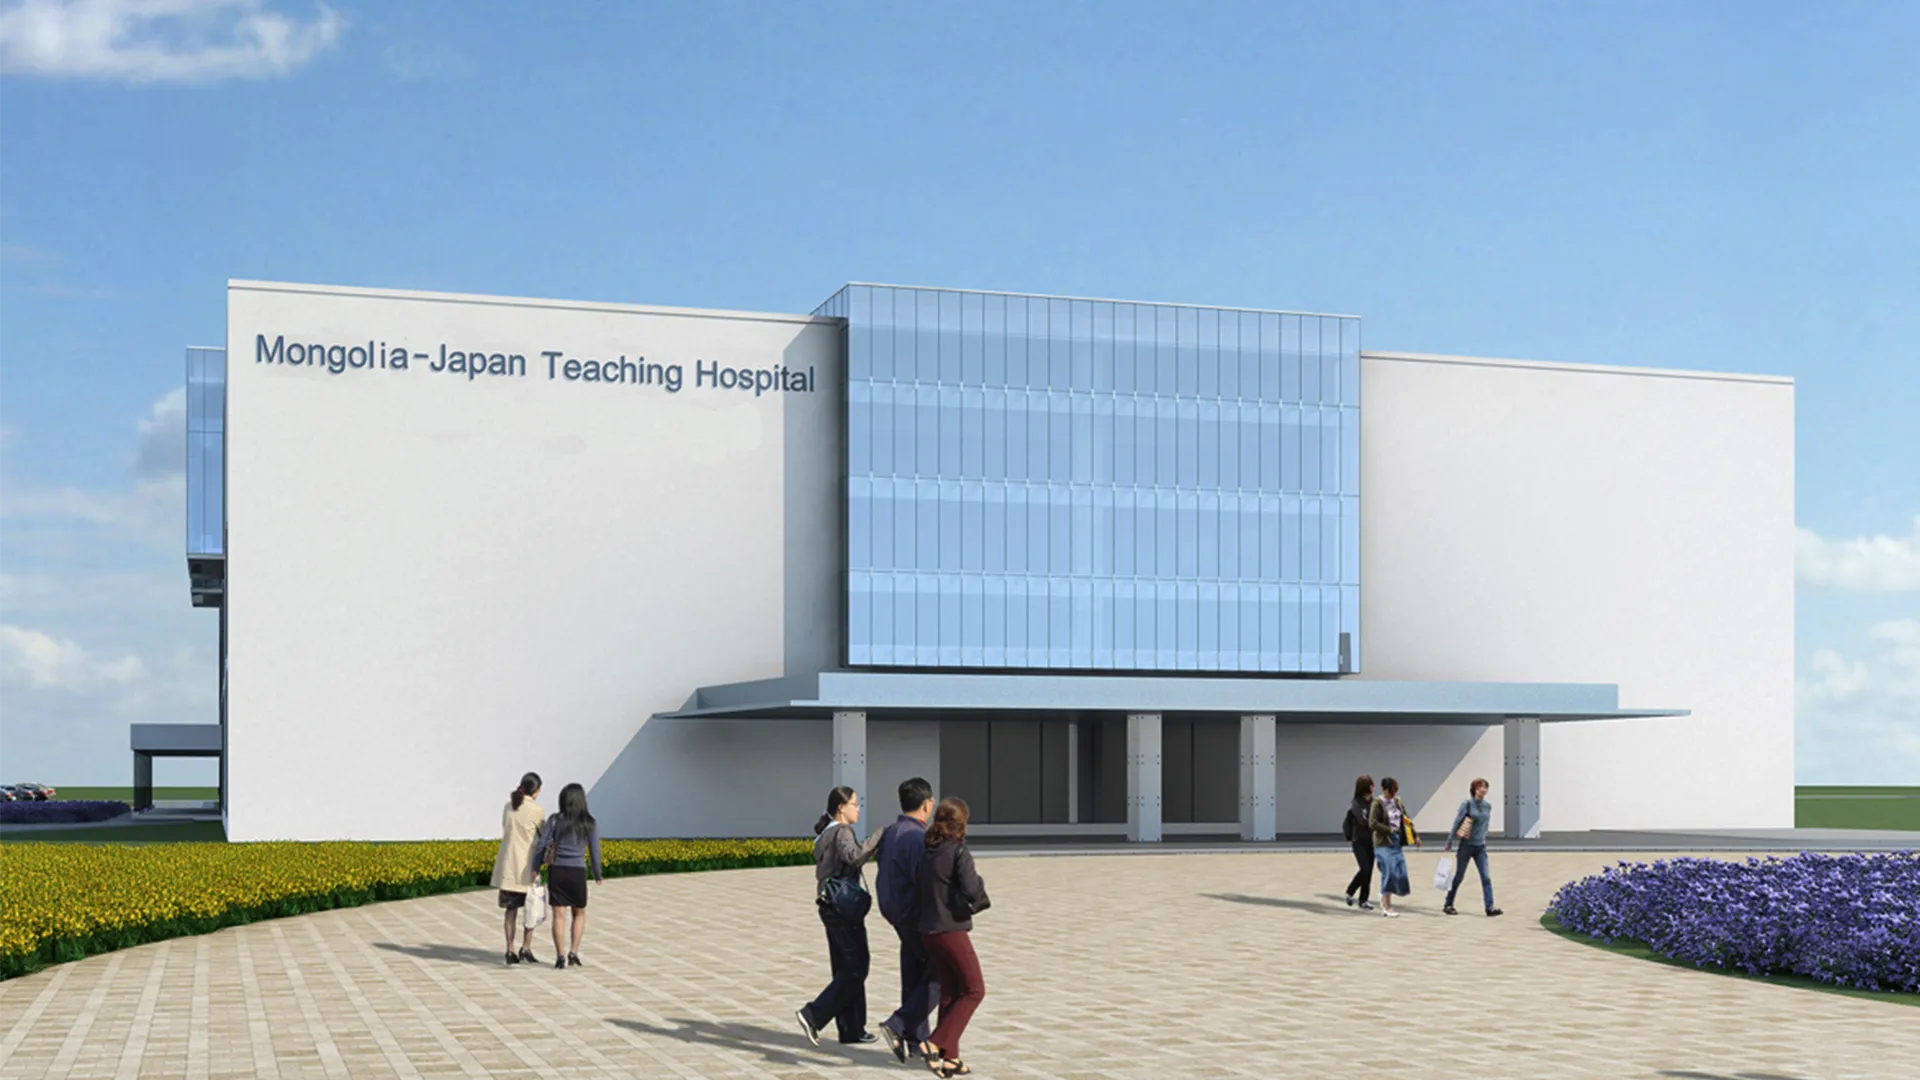 Mongolia-Japan Teaching Hospital Design